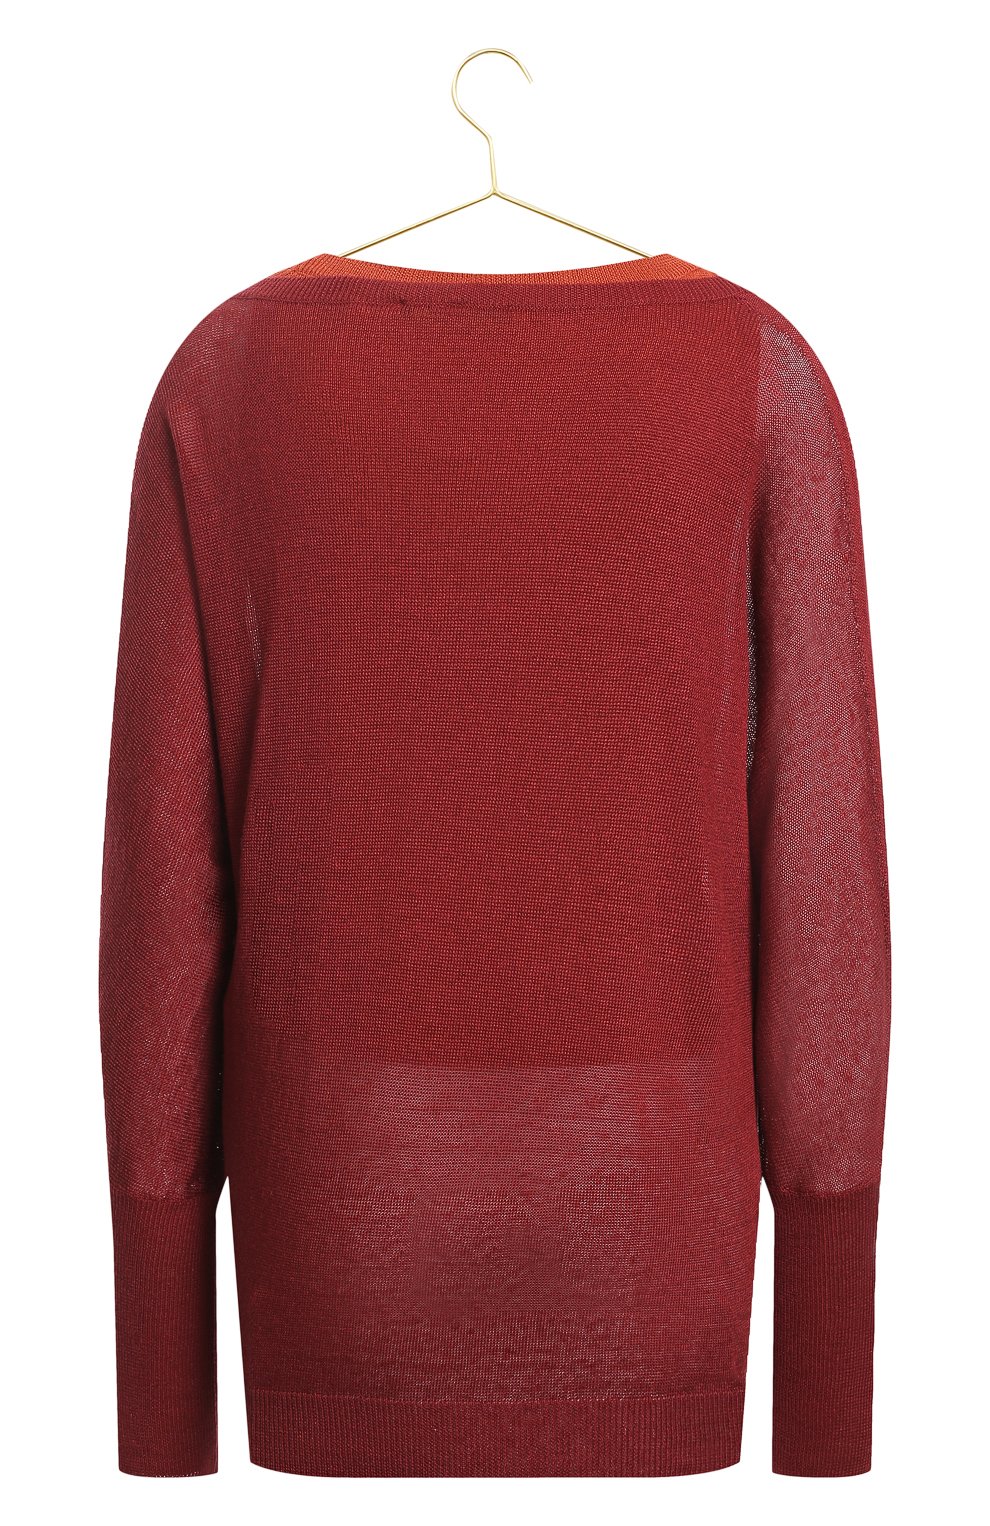 Пуловер изо льна и шелка | Loro Piana | Бордовый - 2